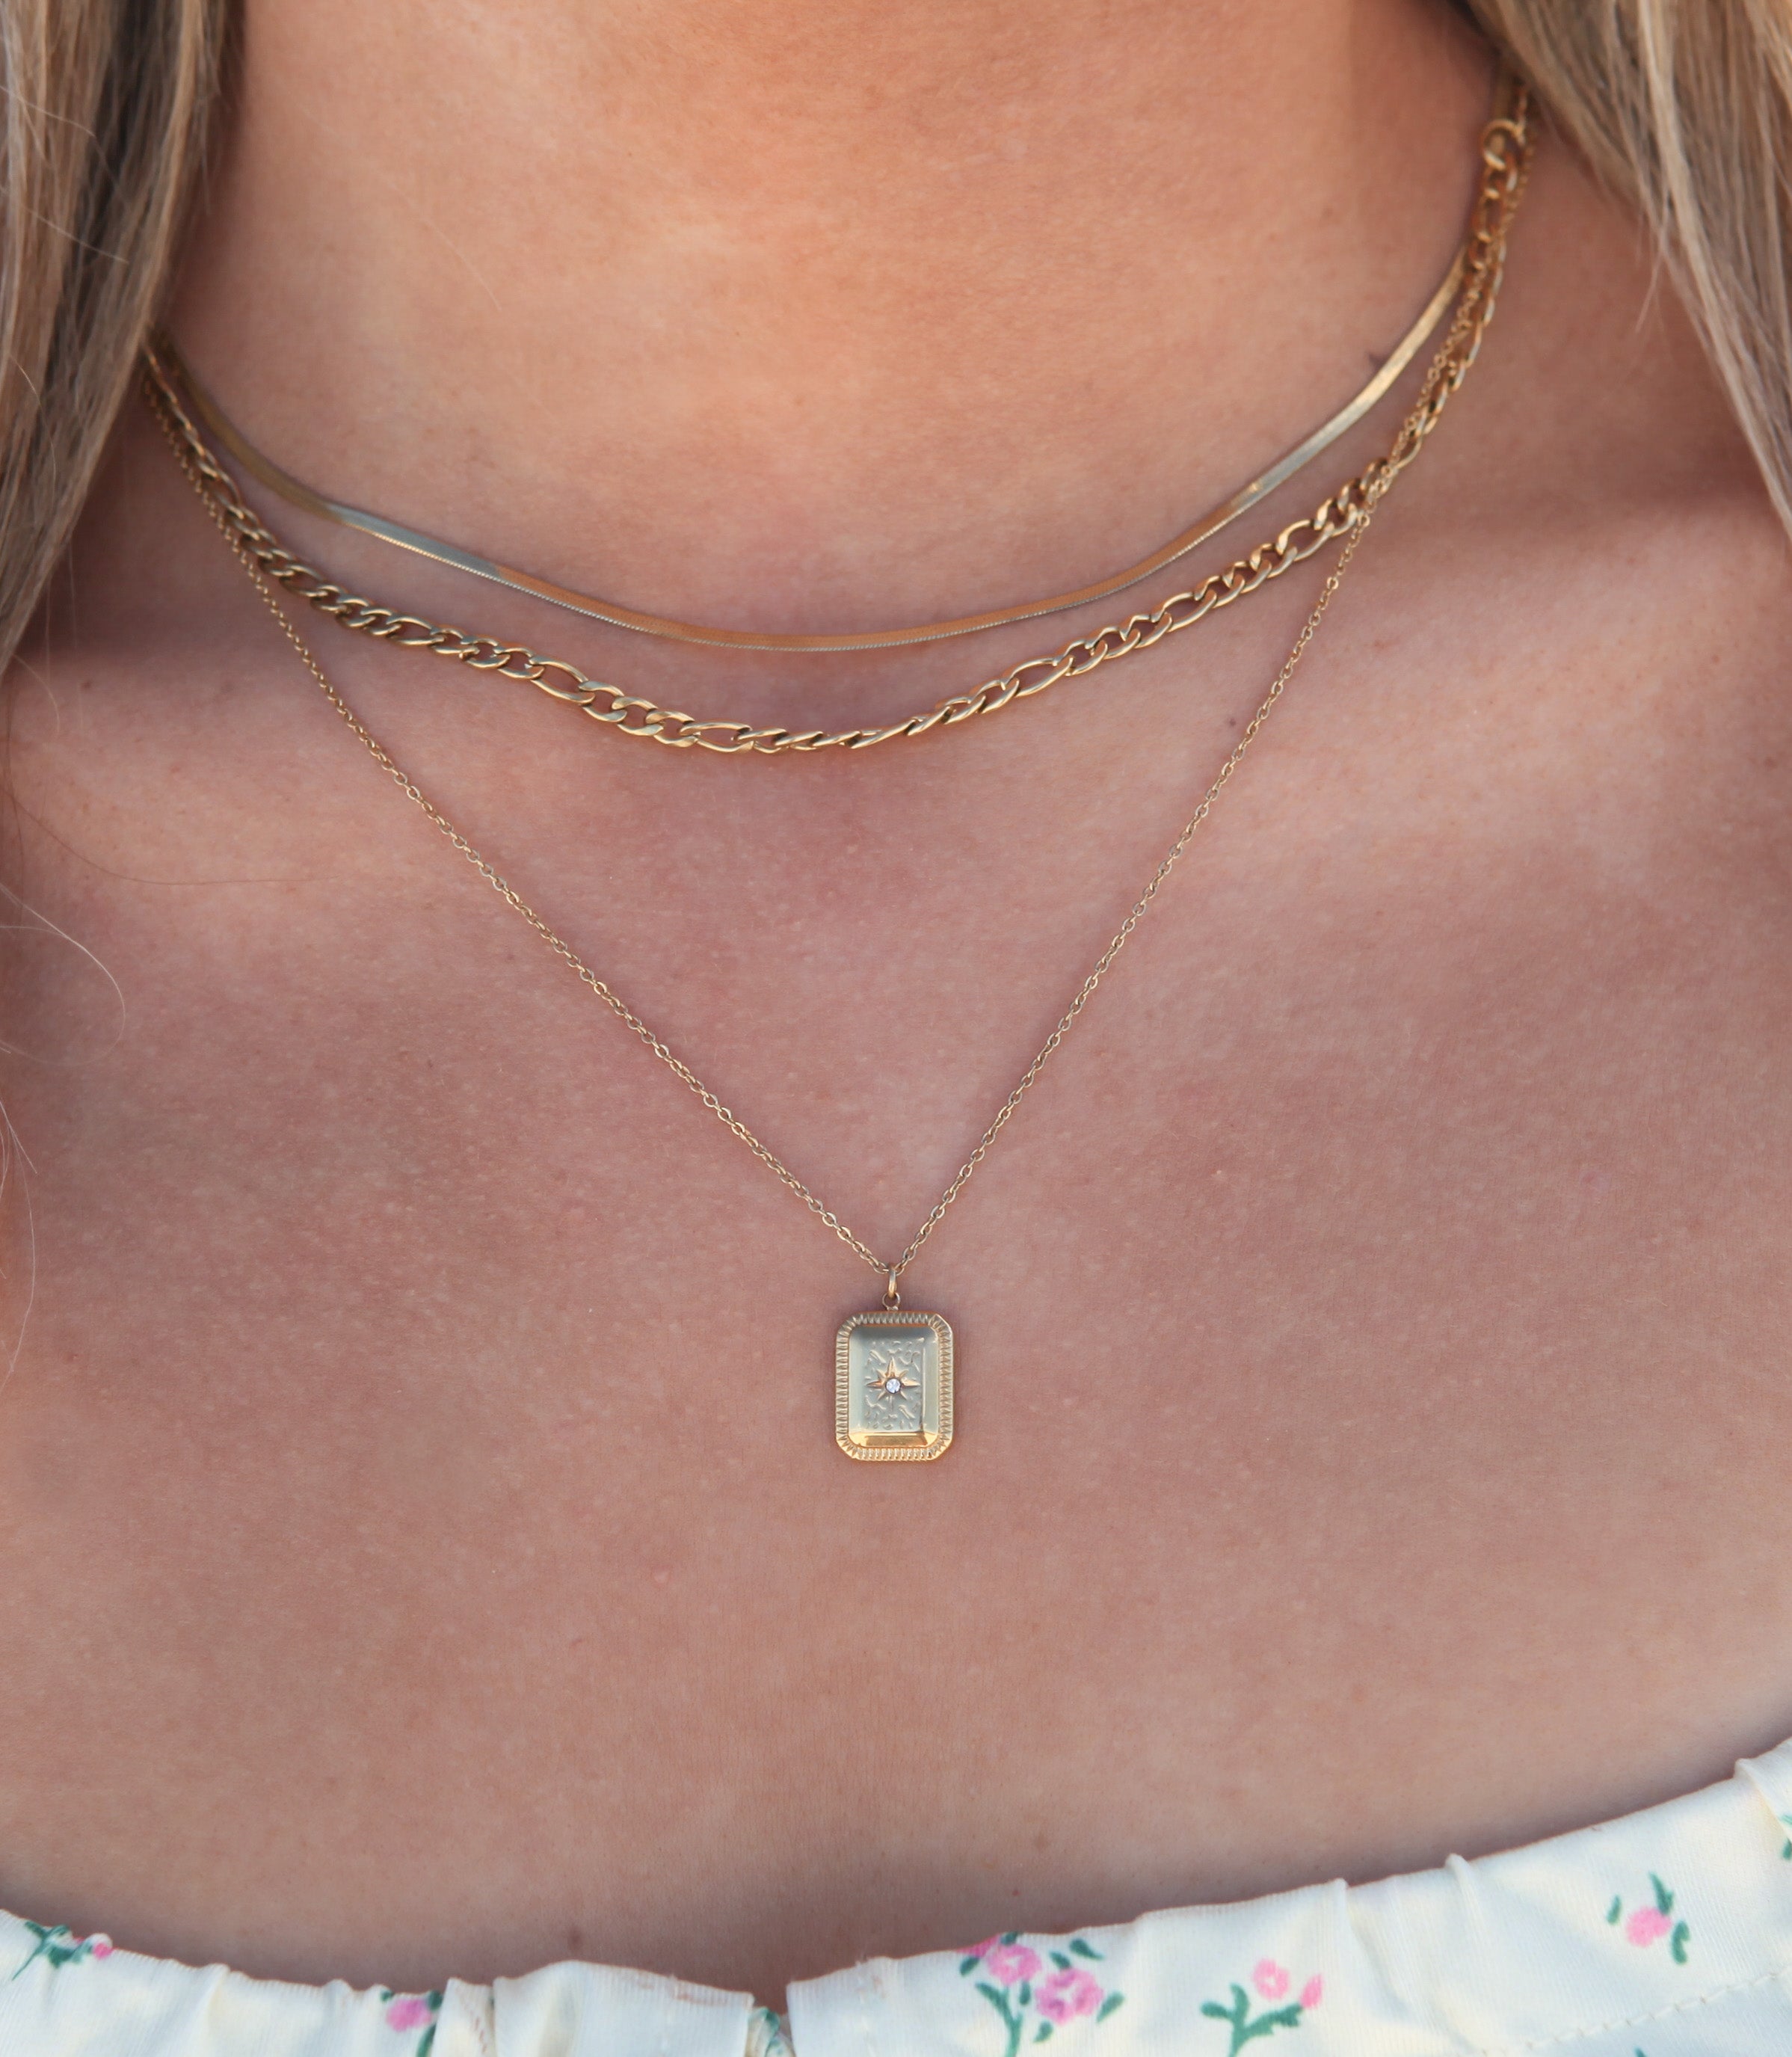 Taylor - 18k Gold Necklace